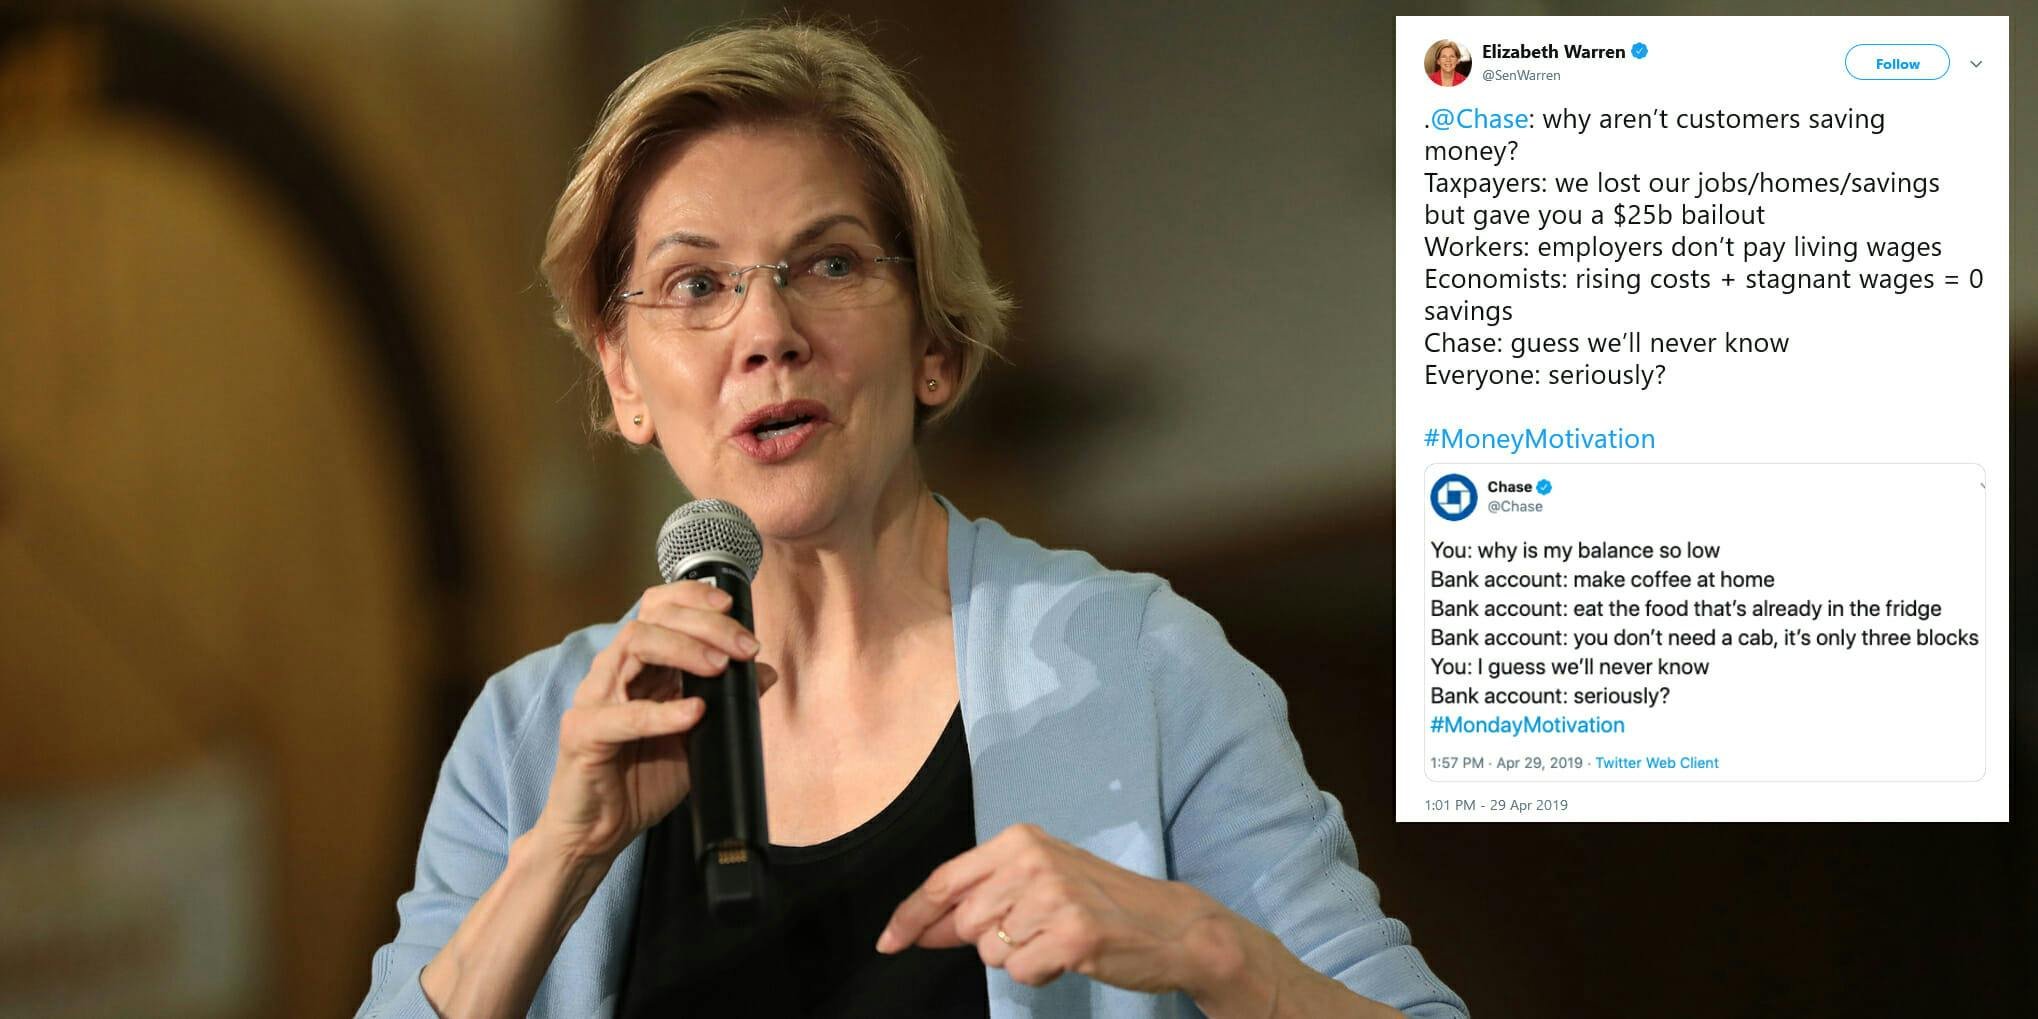 That terrible Chase bank tweet even caught the eye of Elizabeth Warren